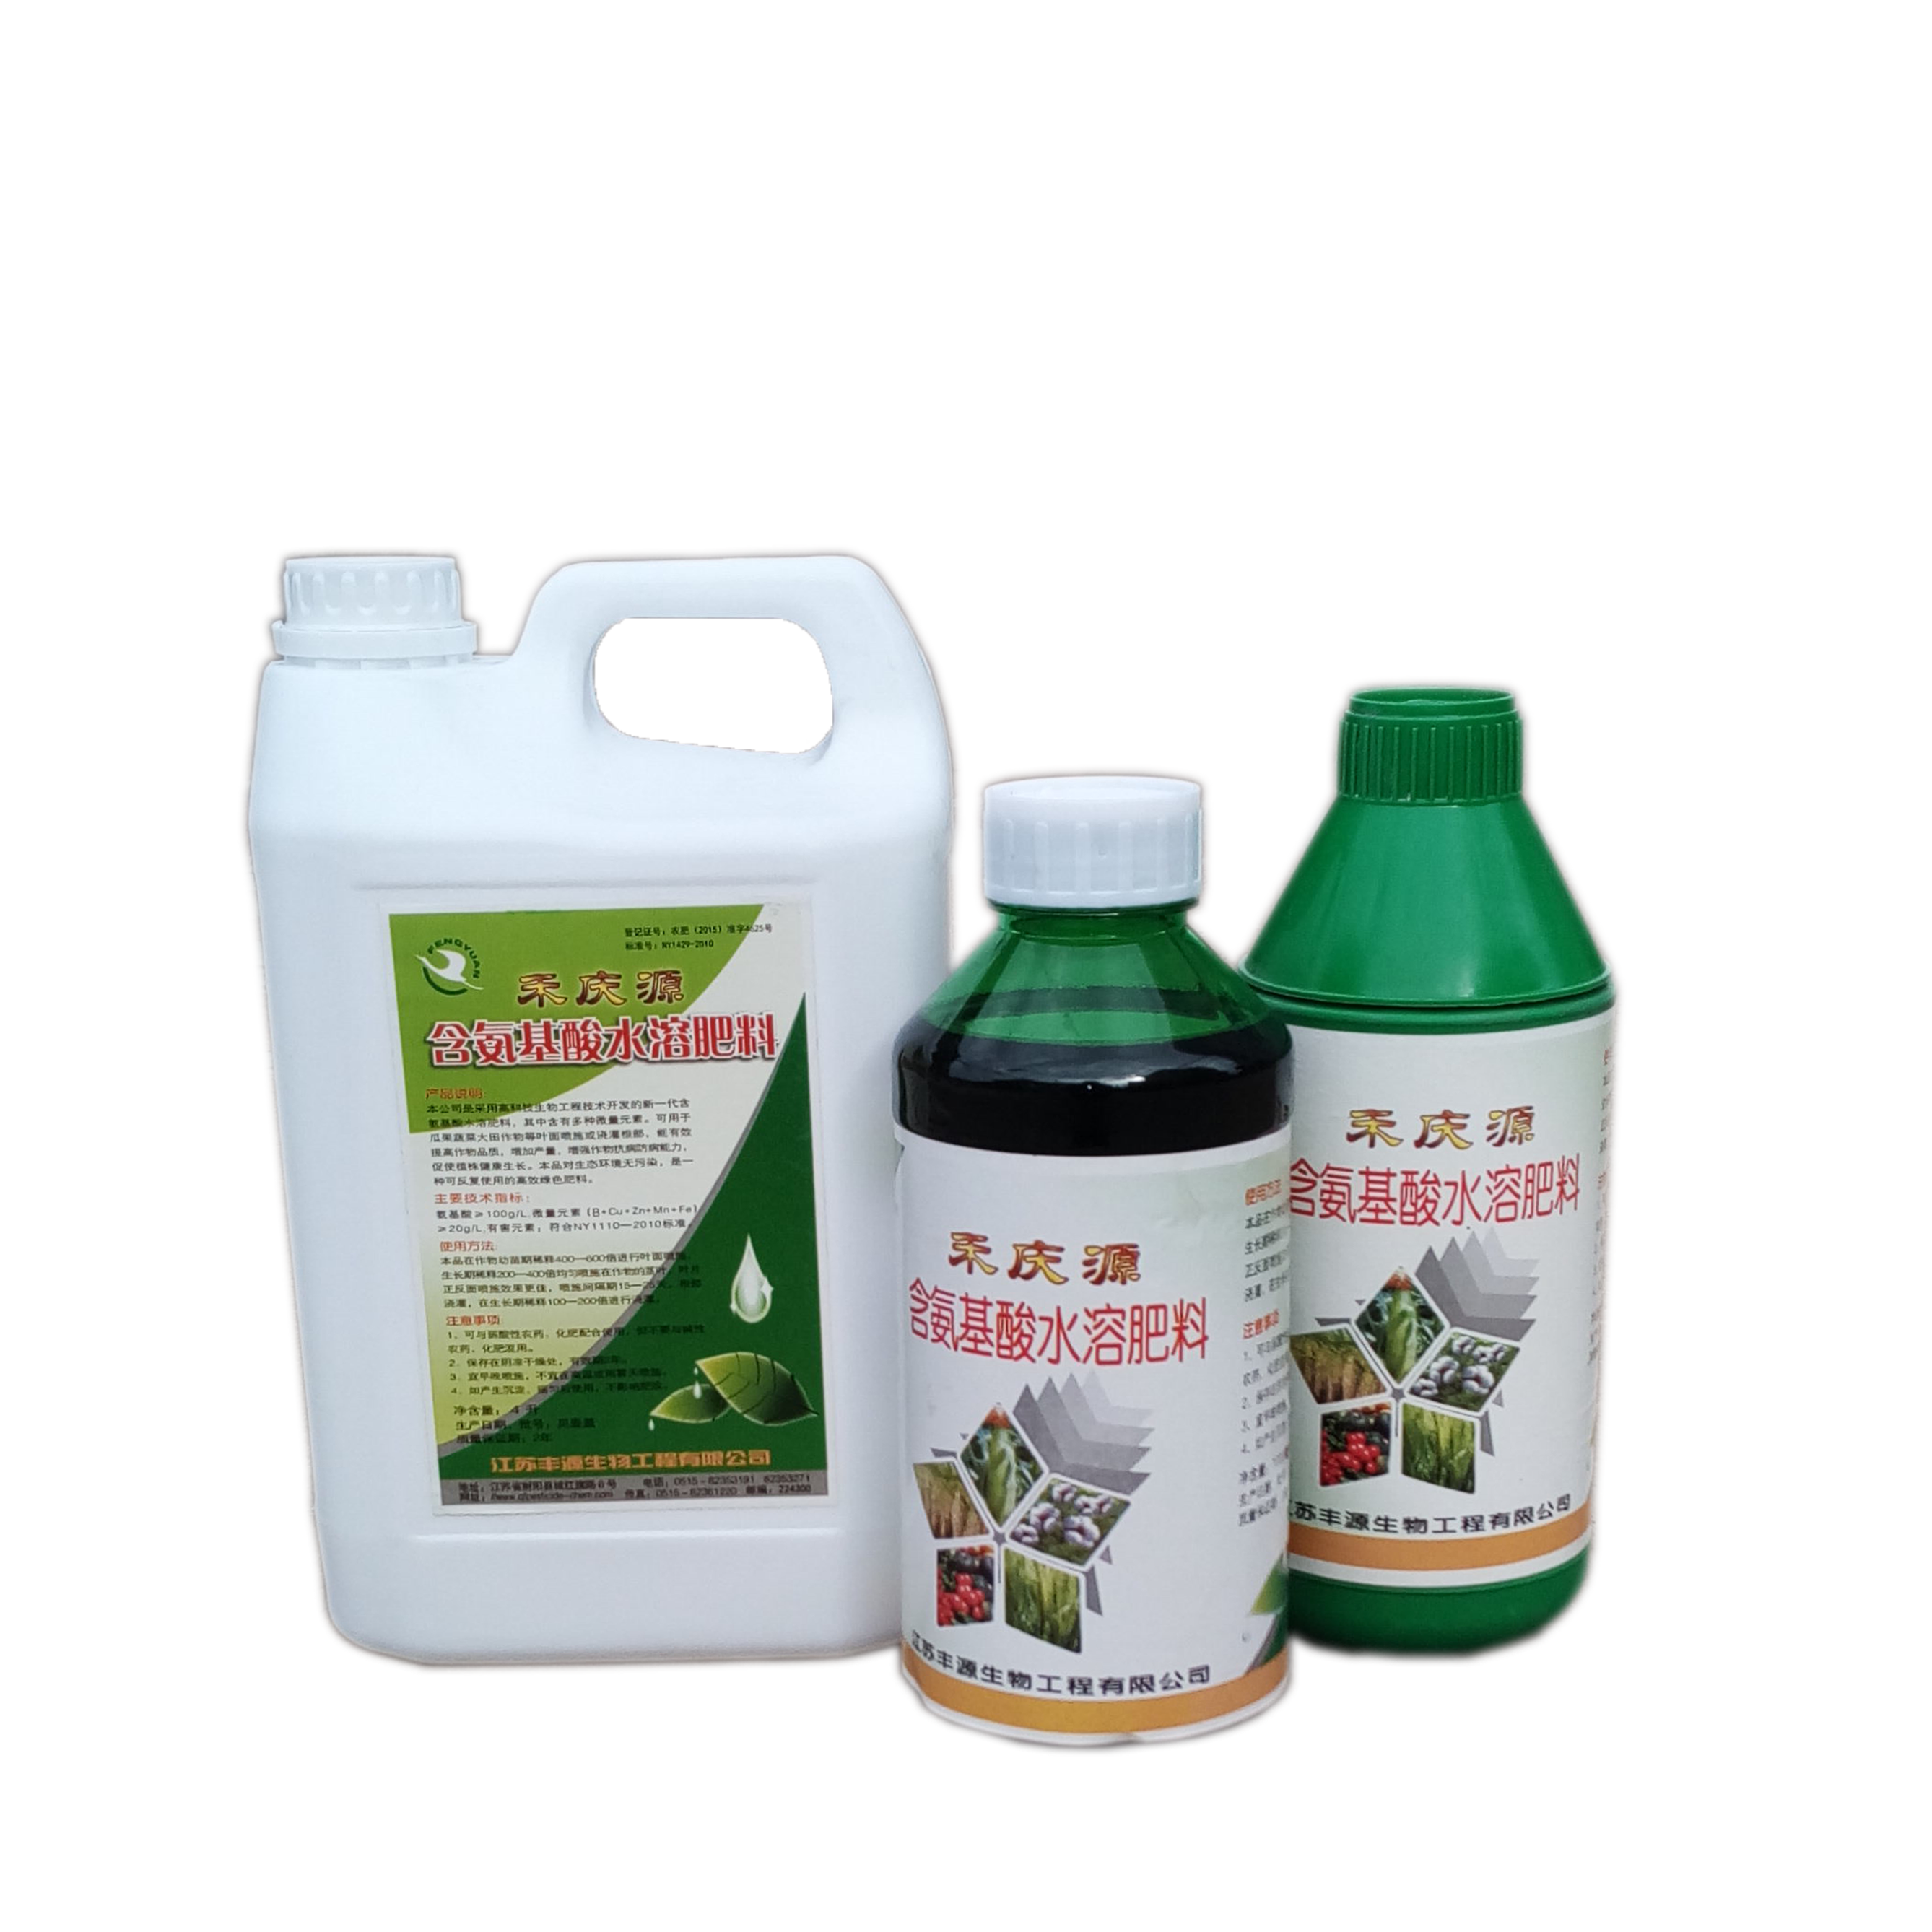 Amino Acid soluble fertilizer